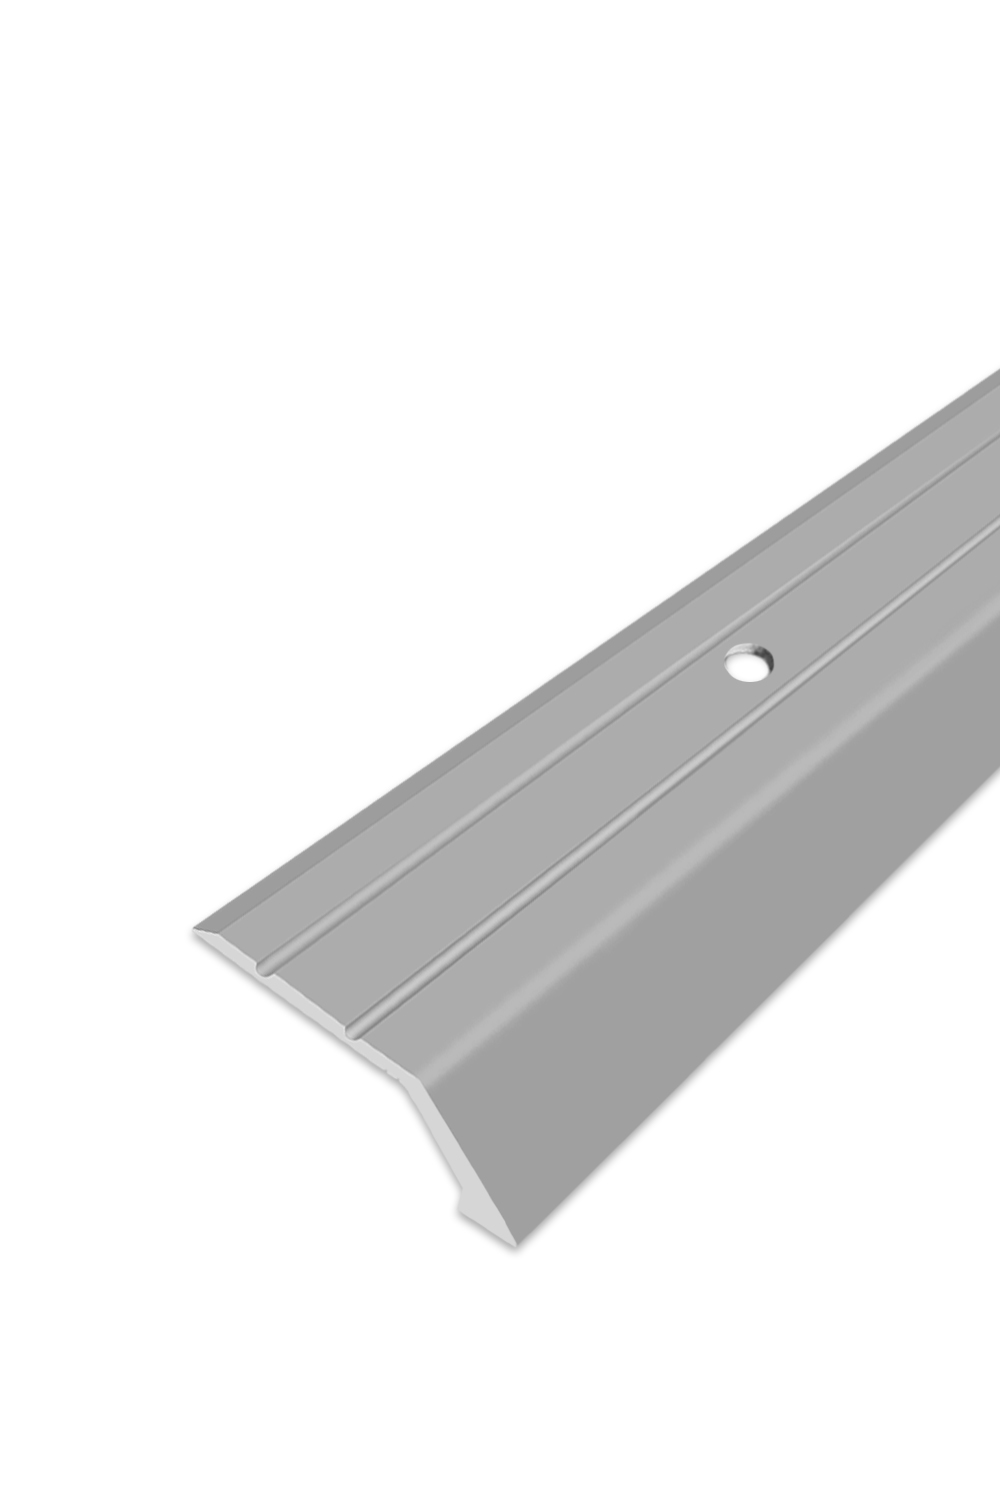 Ukončovací profil vrtaný - Stříbrný 38x10 mm